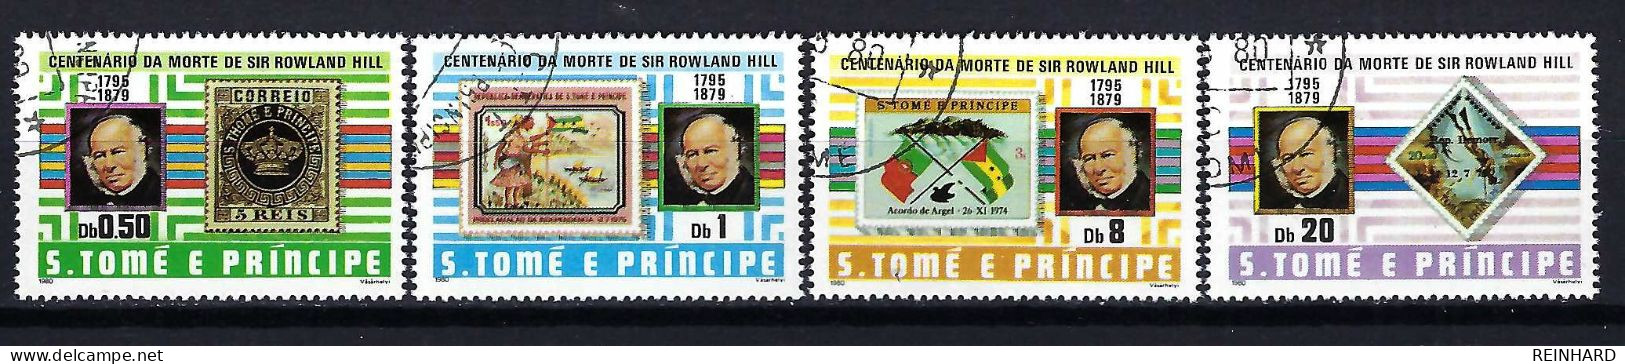 S. TOME E PRINCIPE Komplettsatz Mi-Nr. 641 - 644 Sir Rowland Hill Gestempelt - Siehe Bild - Sao Tome Et Principe